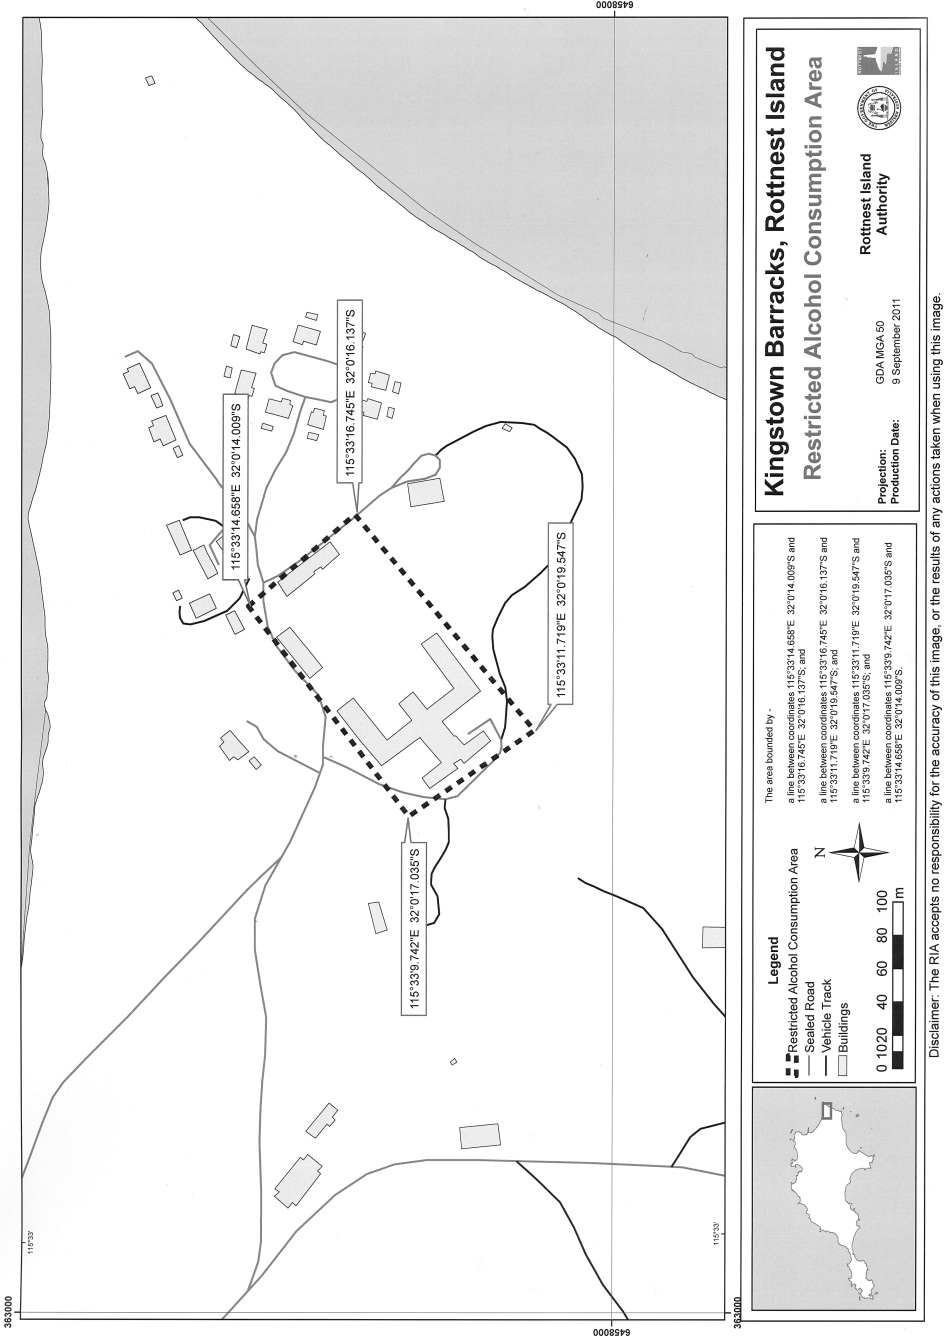 Restriced Alcohol Consumption Area Kingstown Barracks - Rottnest Island (copy 2)